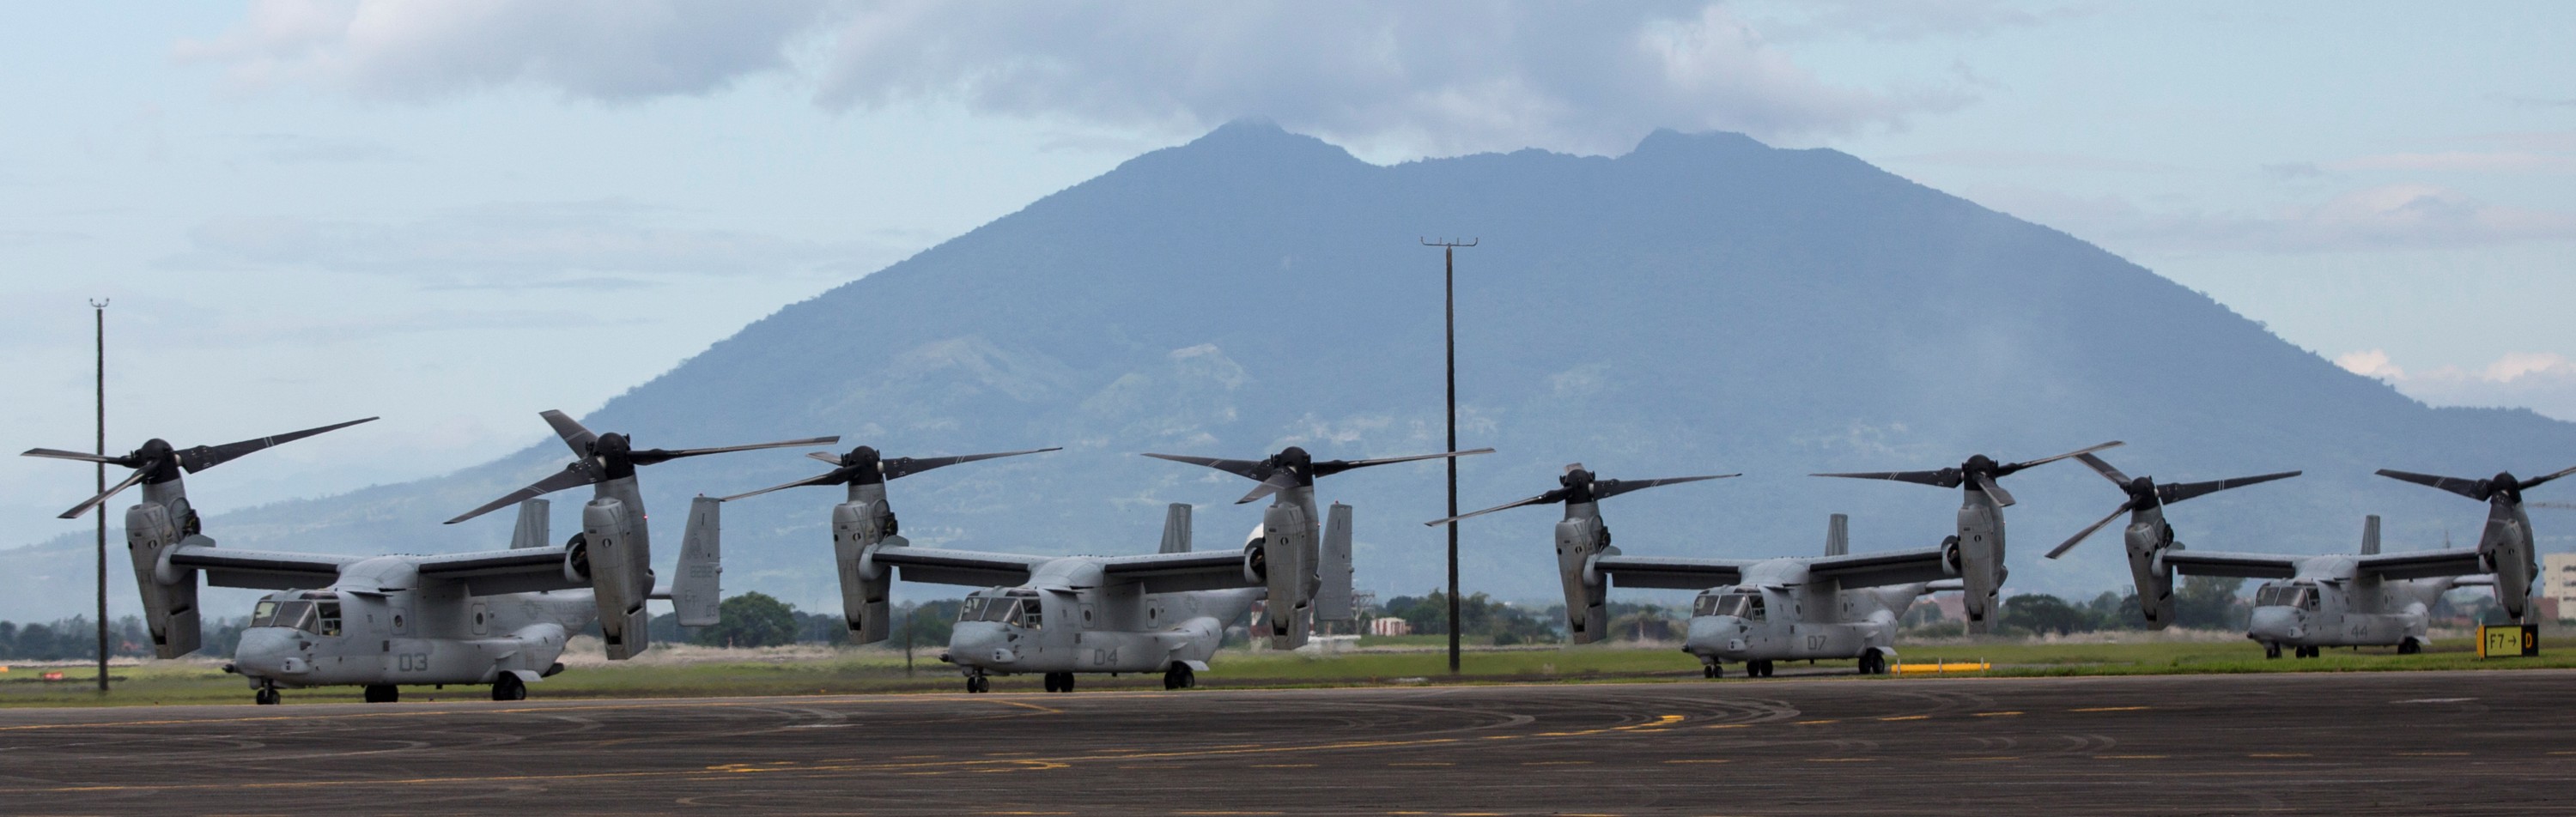 vmm-262 flying tigers mv-22b osprey clark airbase philippines 2014 79